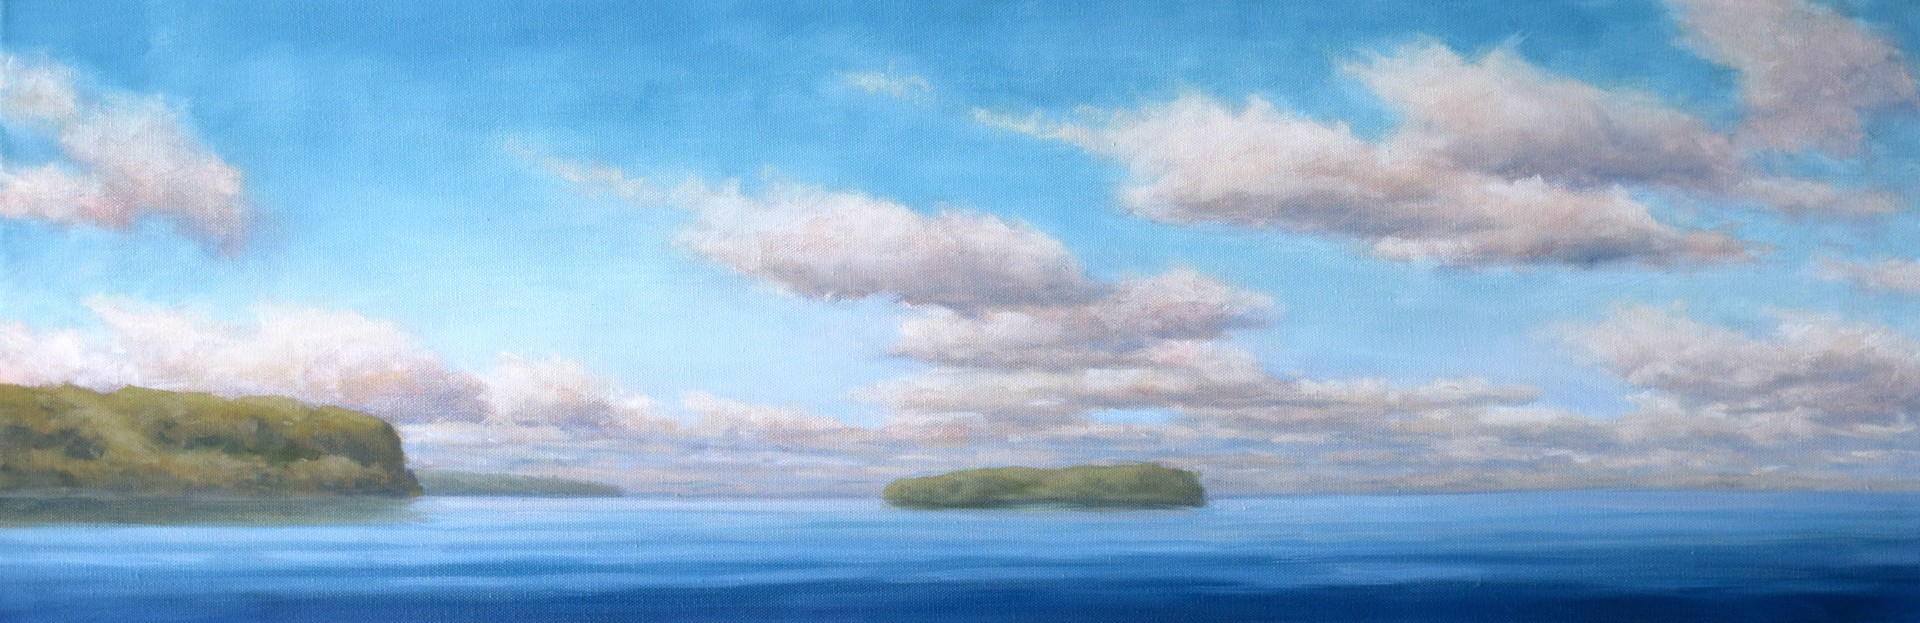 Calm on Eagle Harbor by Tom Linden